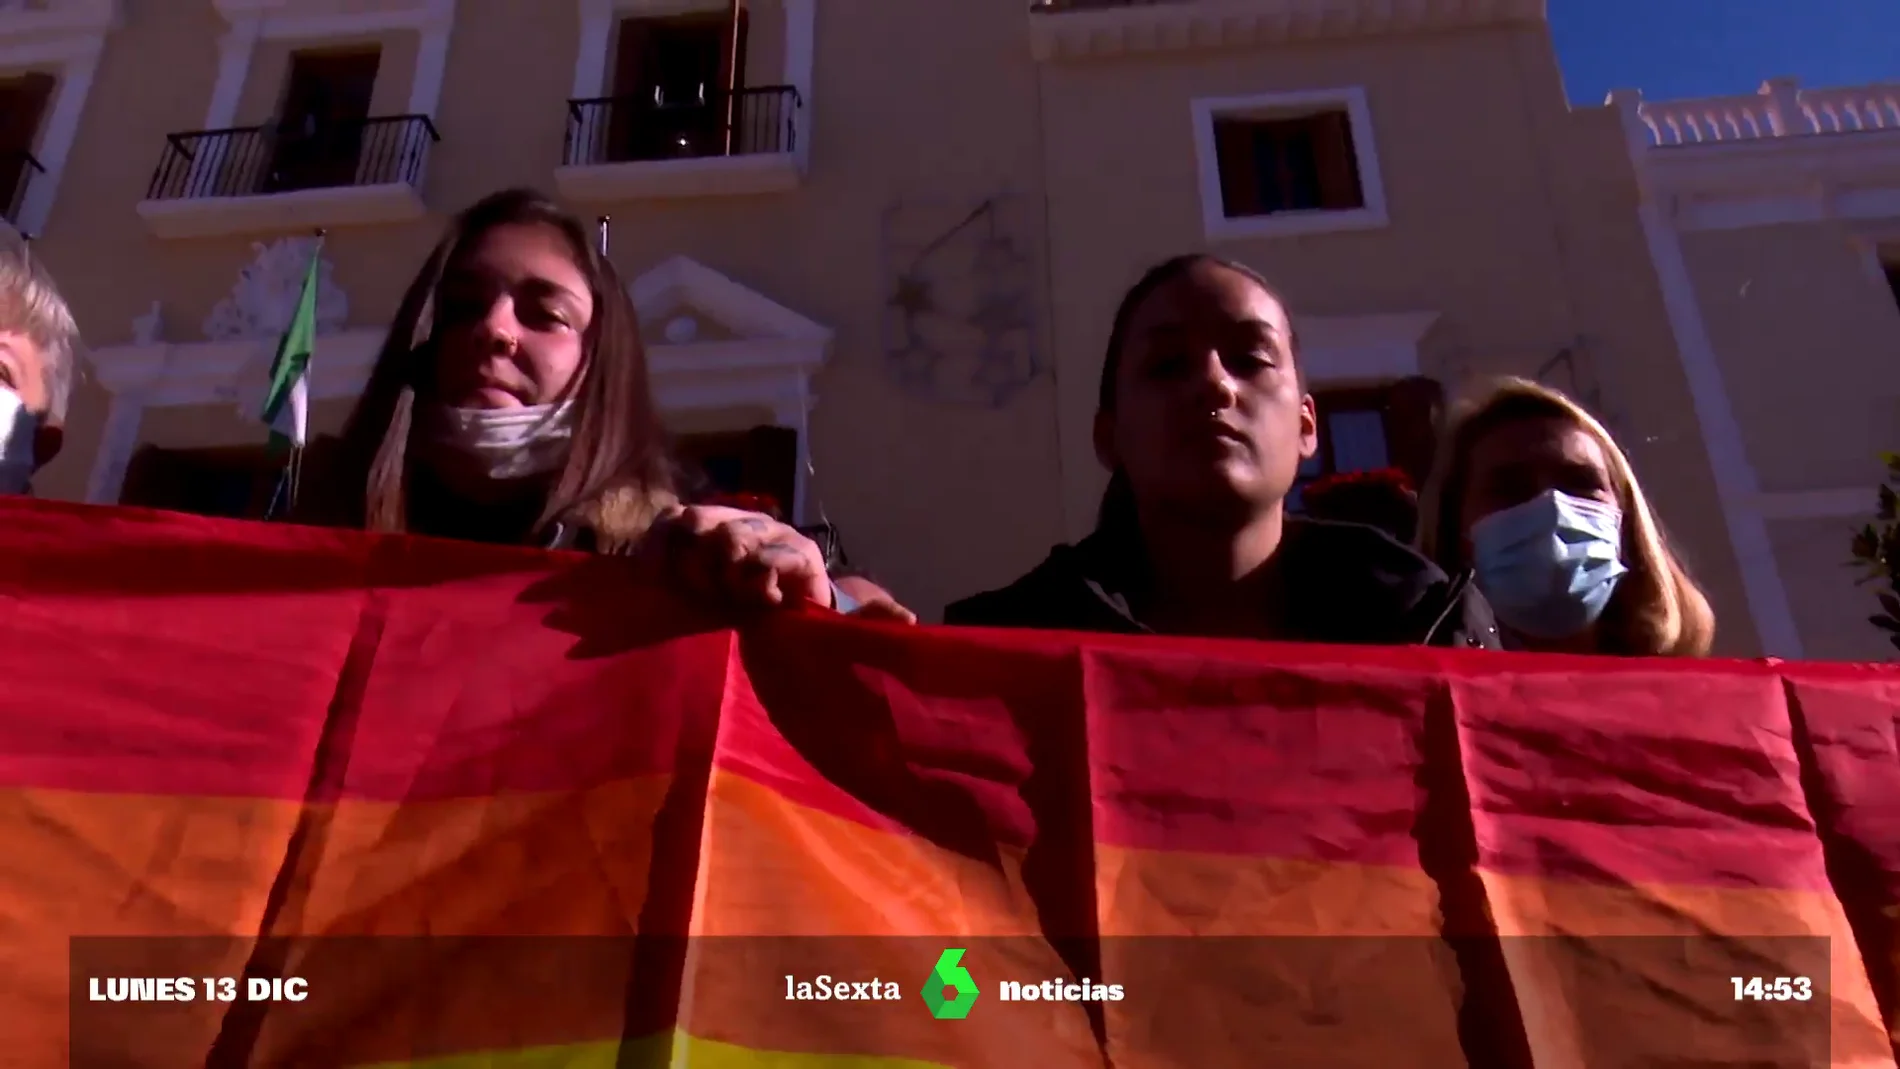 agresion homofoba Madrid